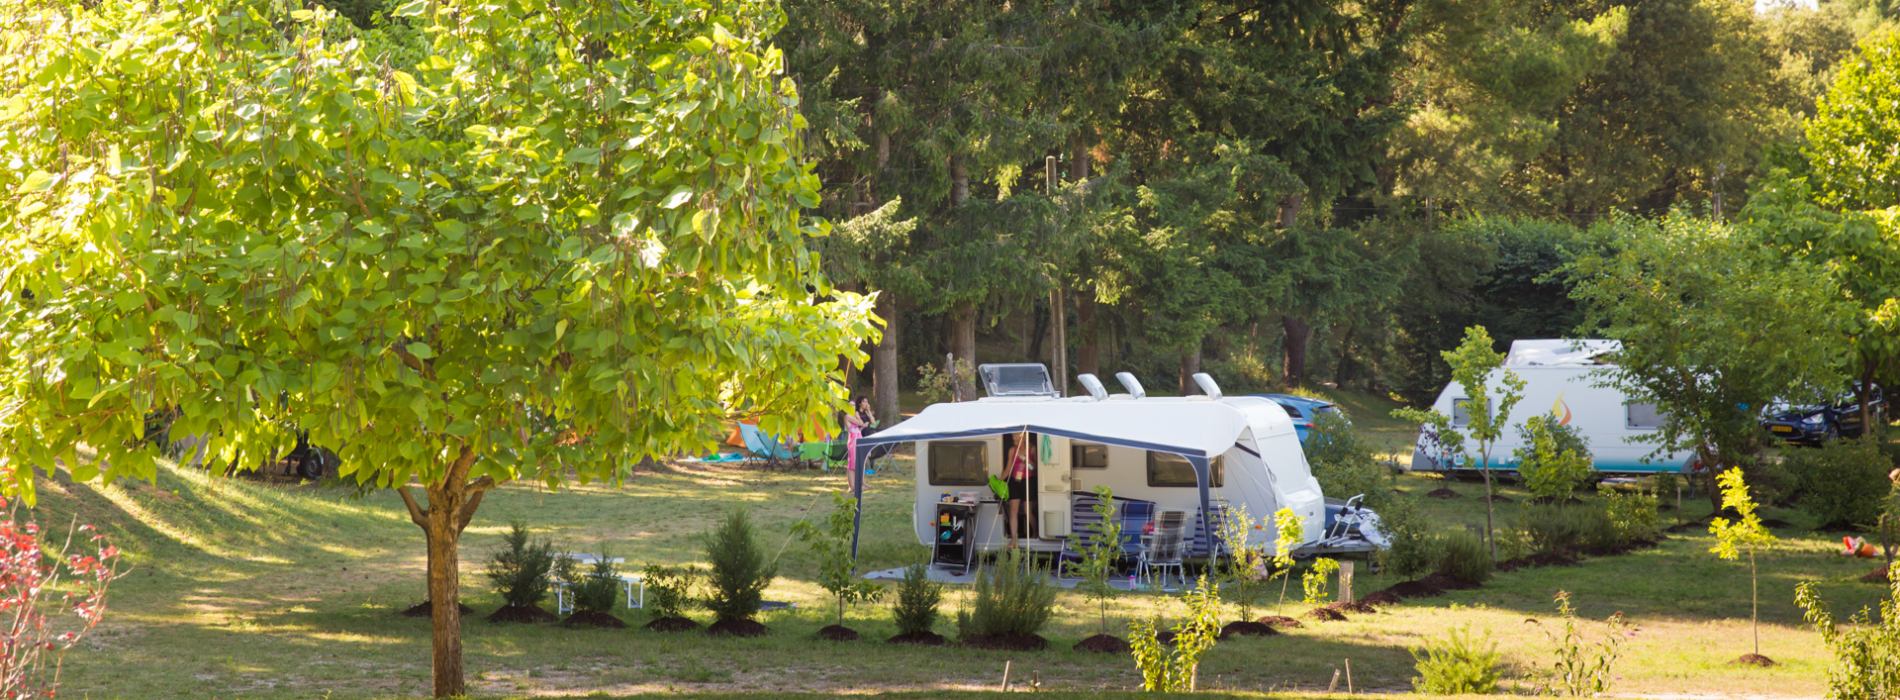 camping emplacement pas cher drome